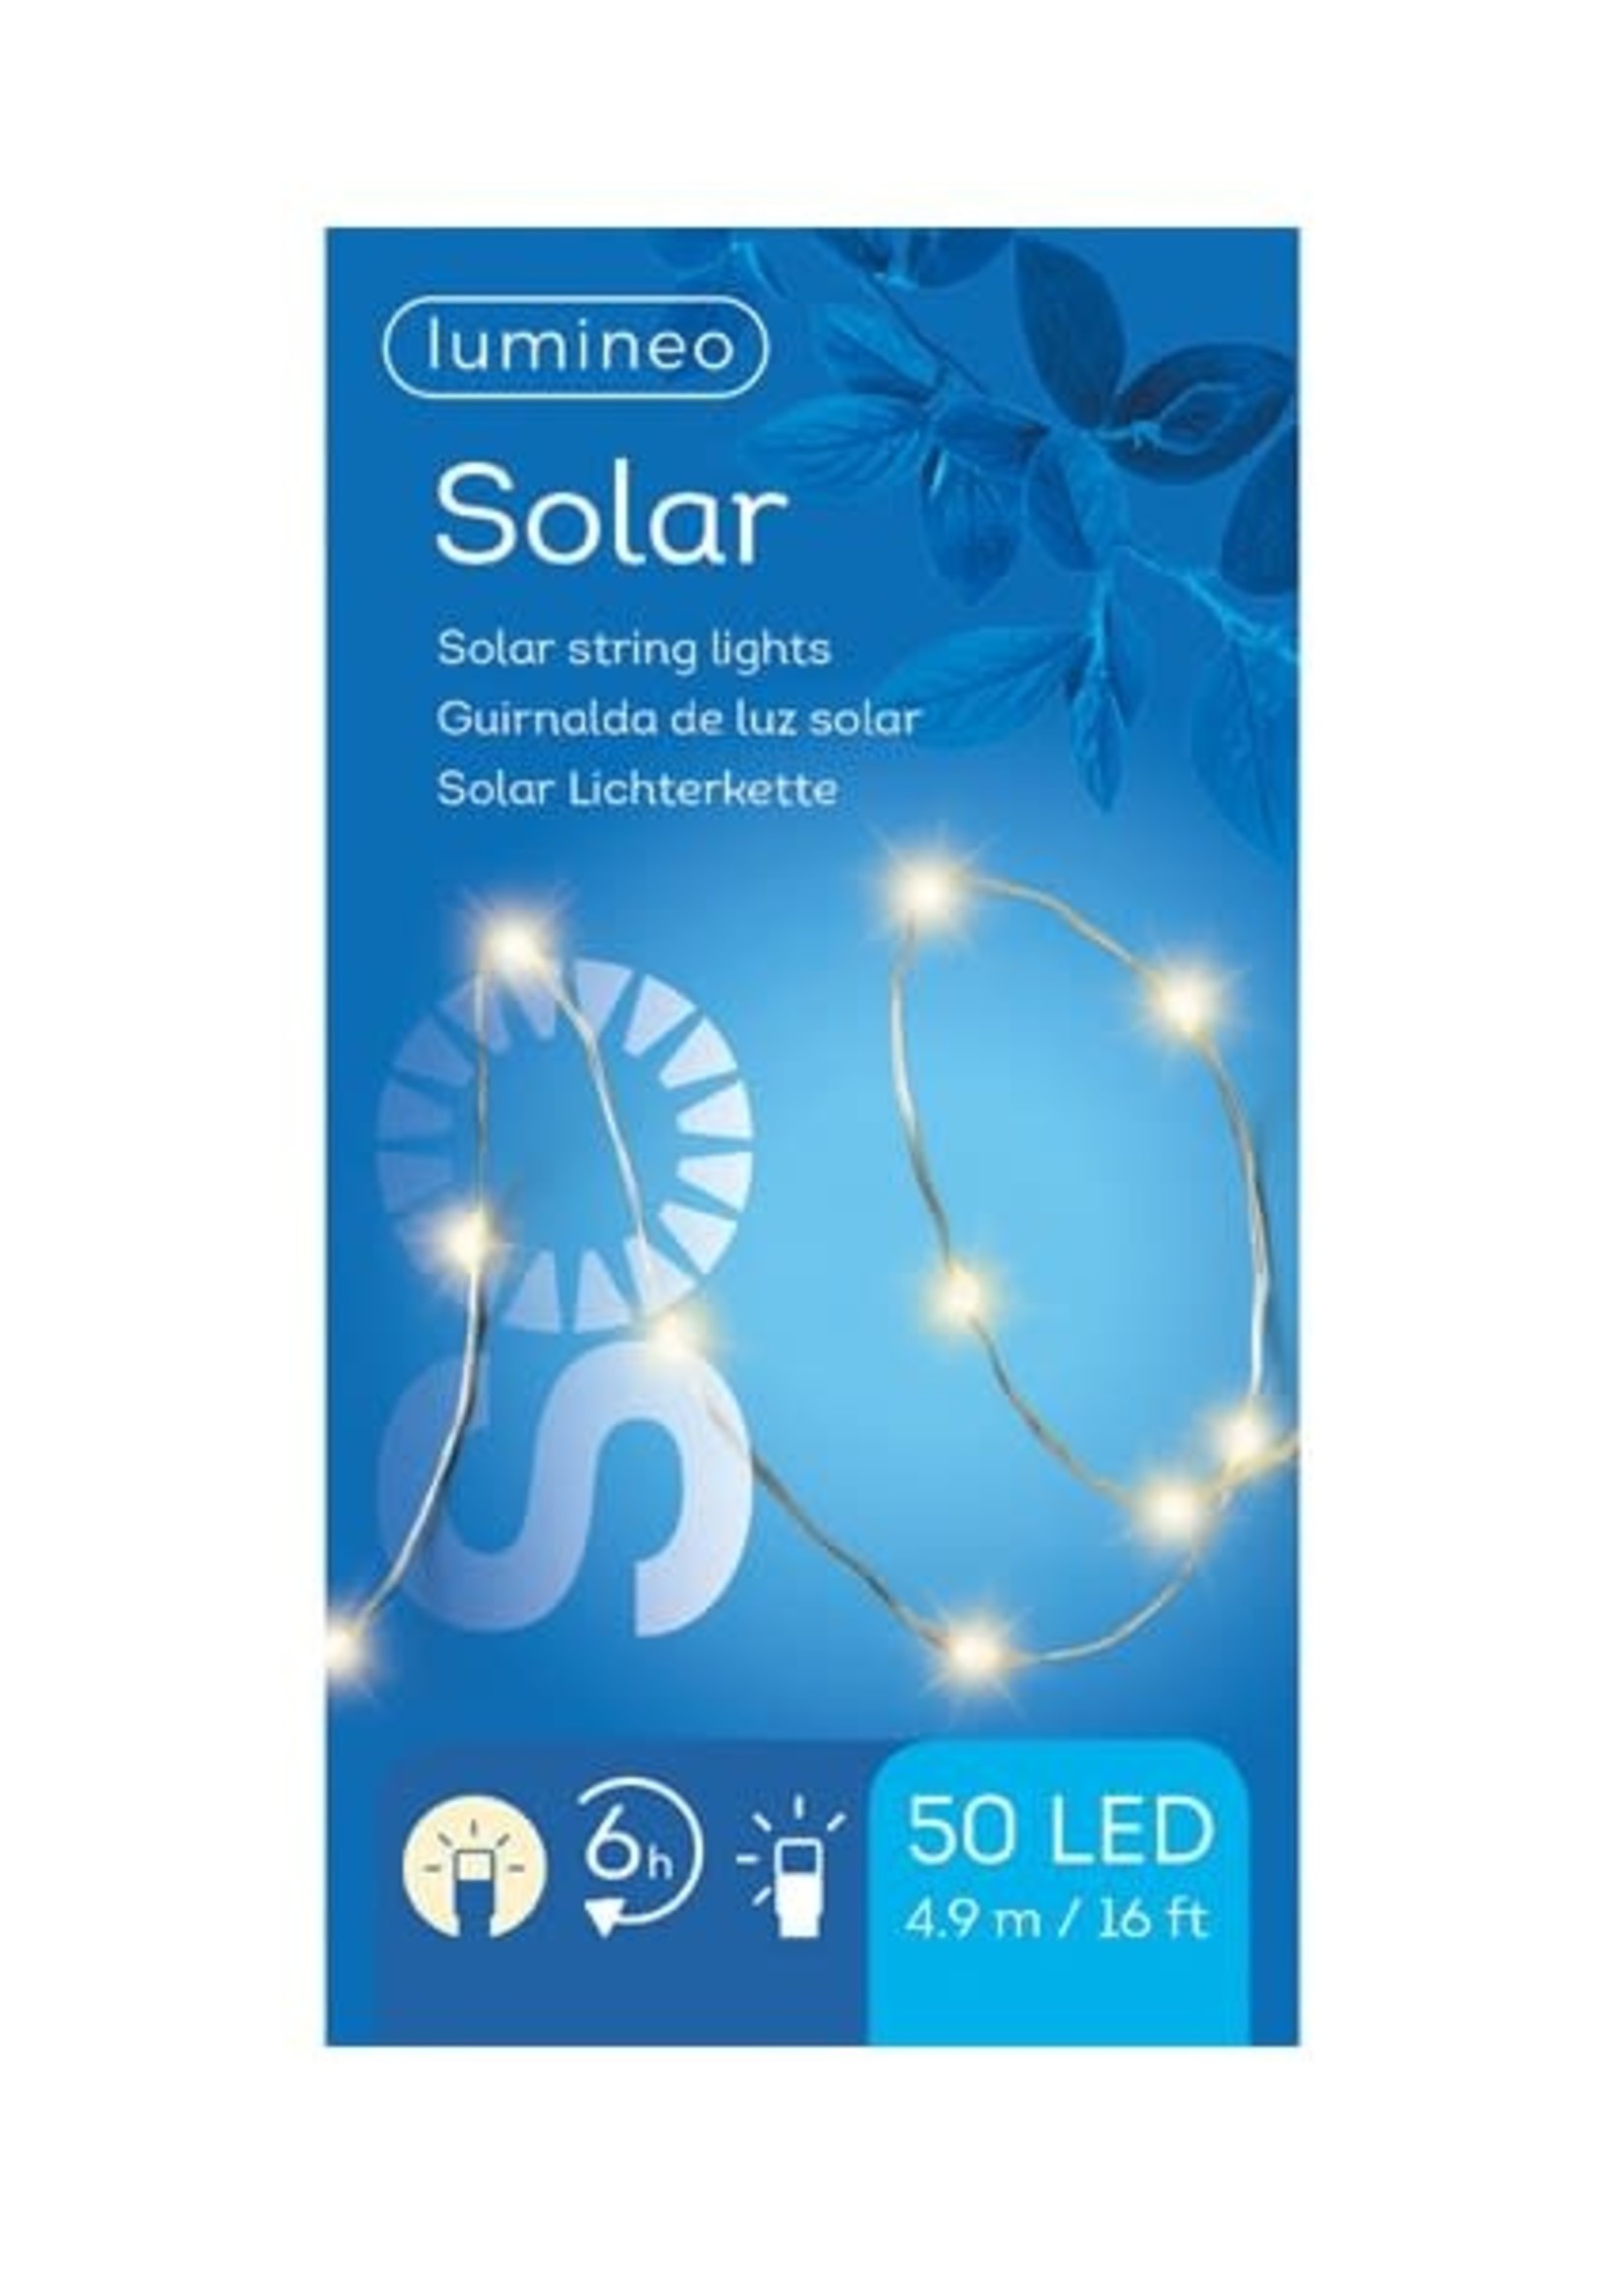 Lumineo Solar Pin Wire Lights Warm White 50 LED